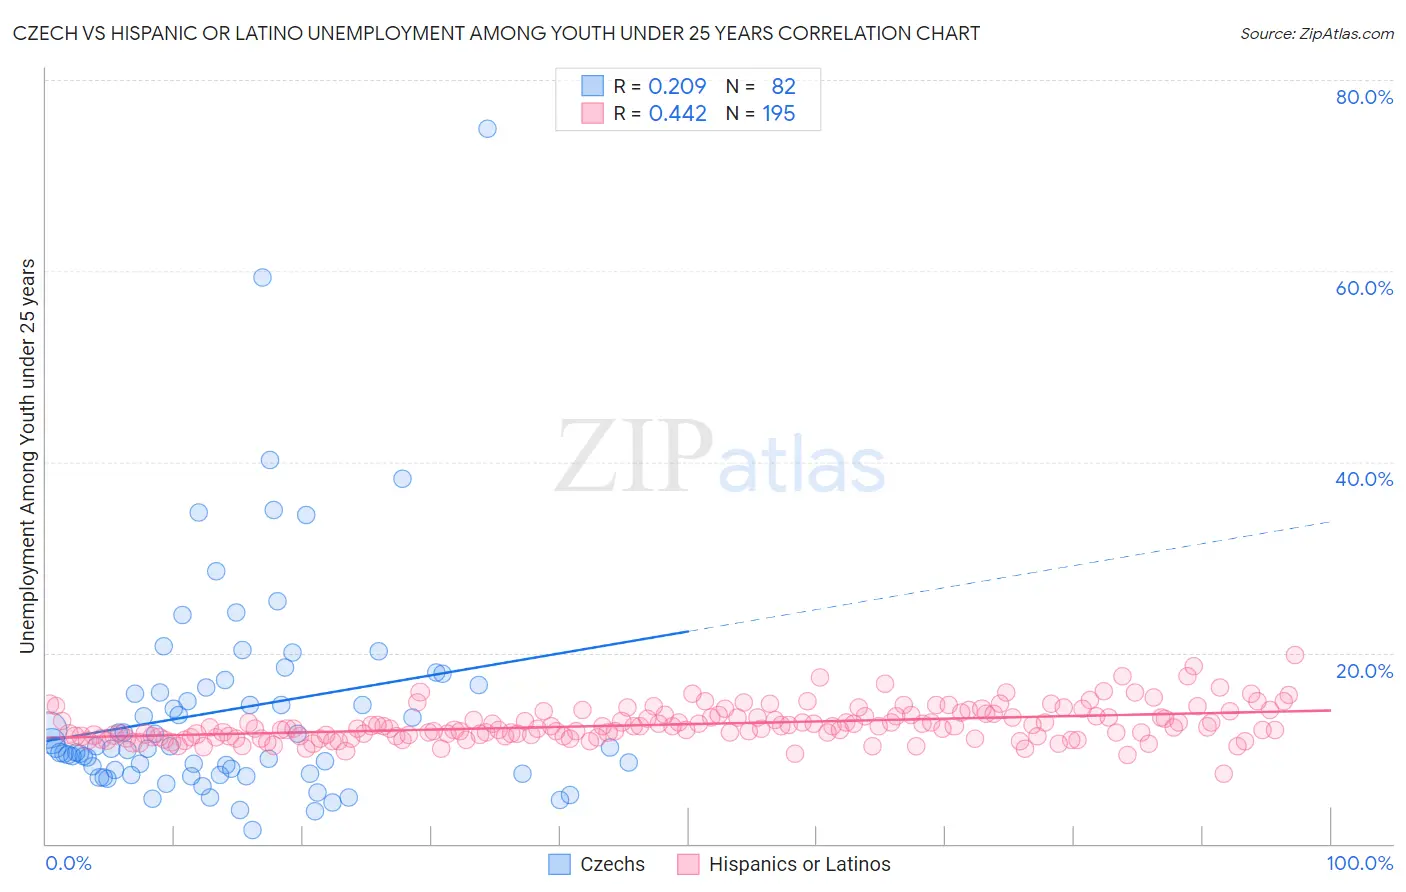 Czech vs Hispanic or Latino Unemployment Among Youth under 25 years